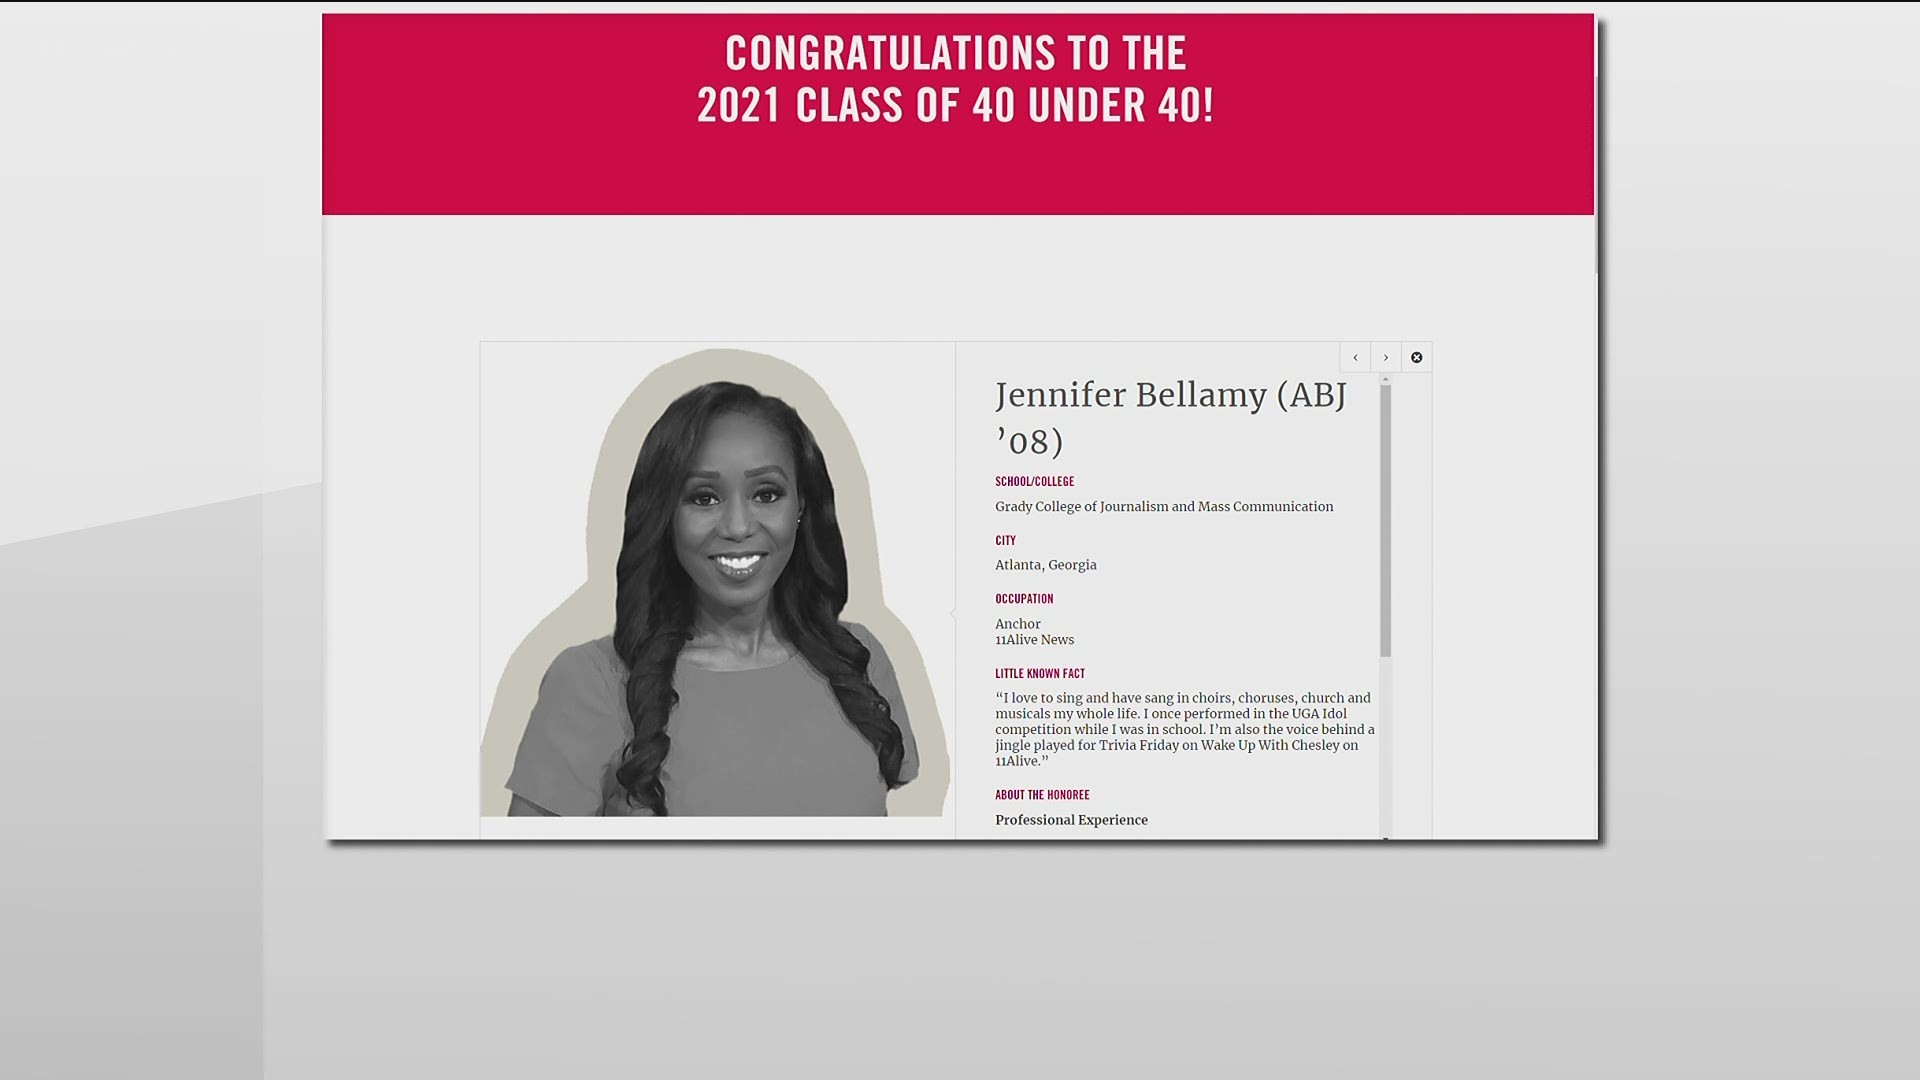 Congratulations, Jennifer!